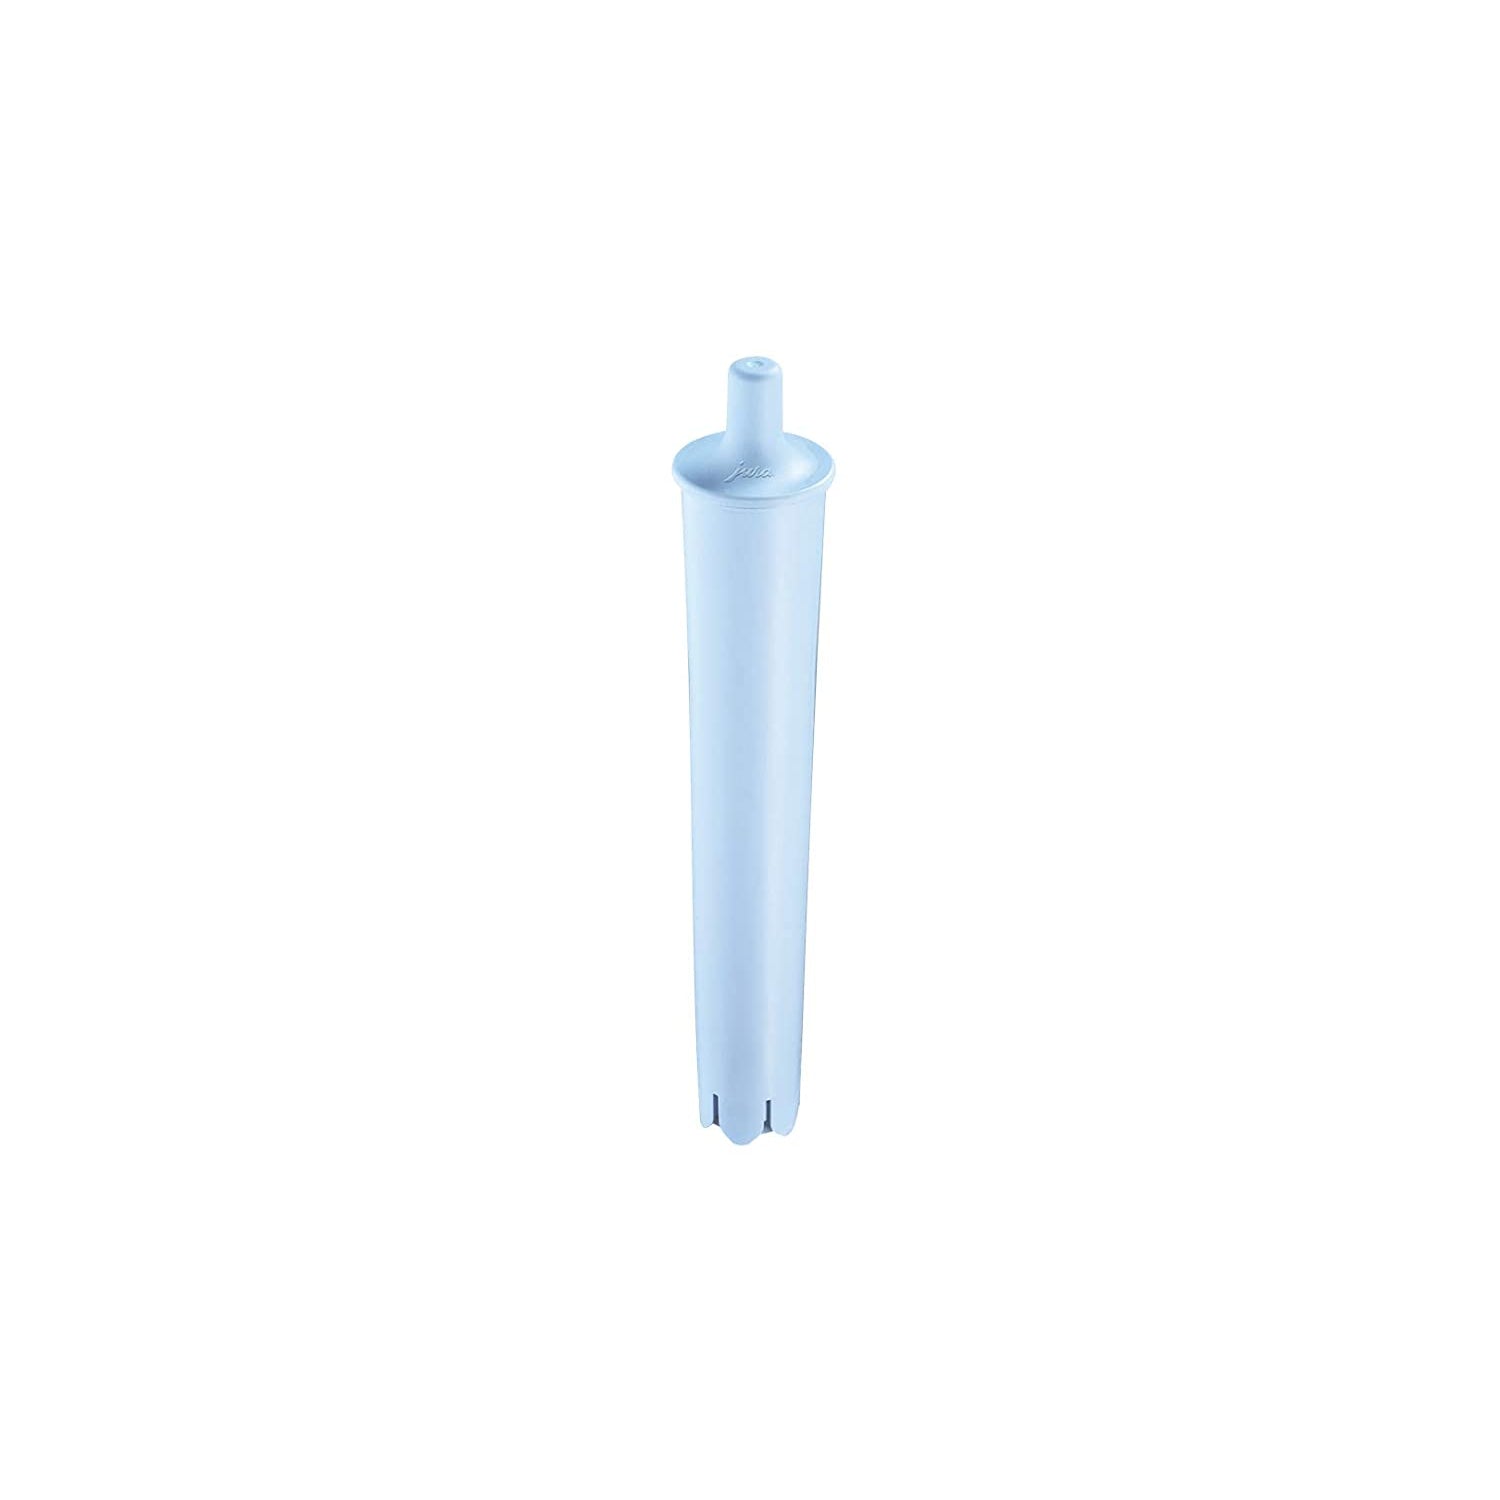 Jura CLARIS Pro Water Filter Cartridge Blue 71720 - Single Unit - Healthxpress.ie